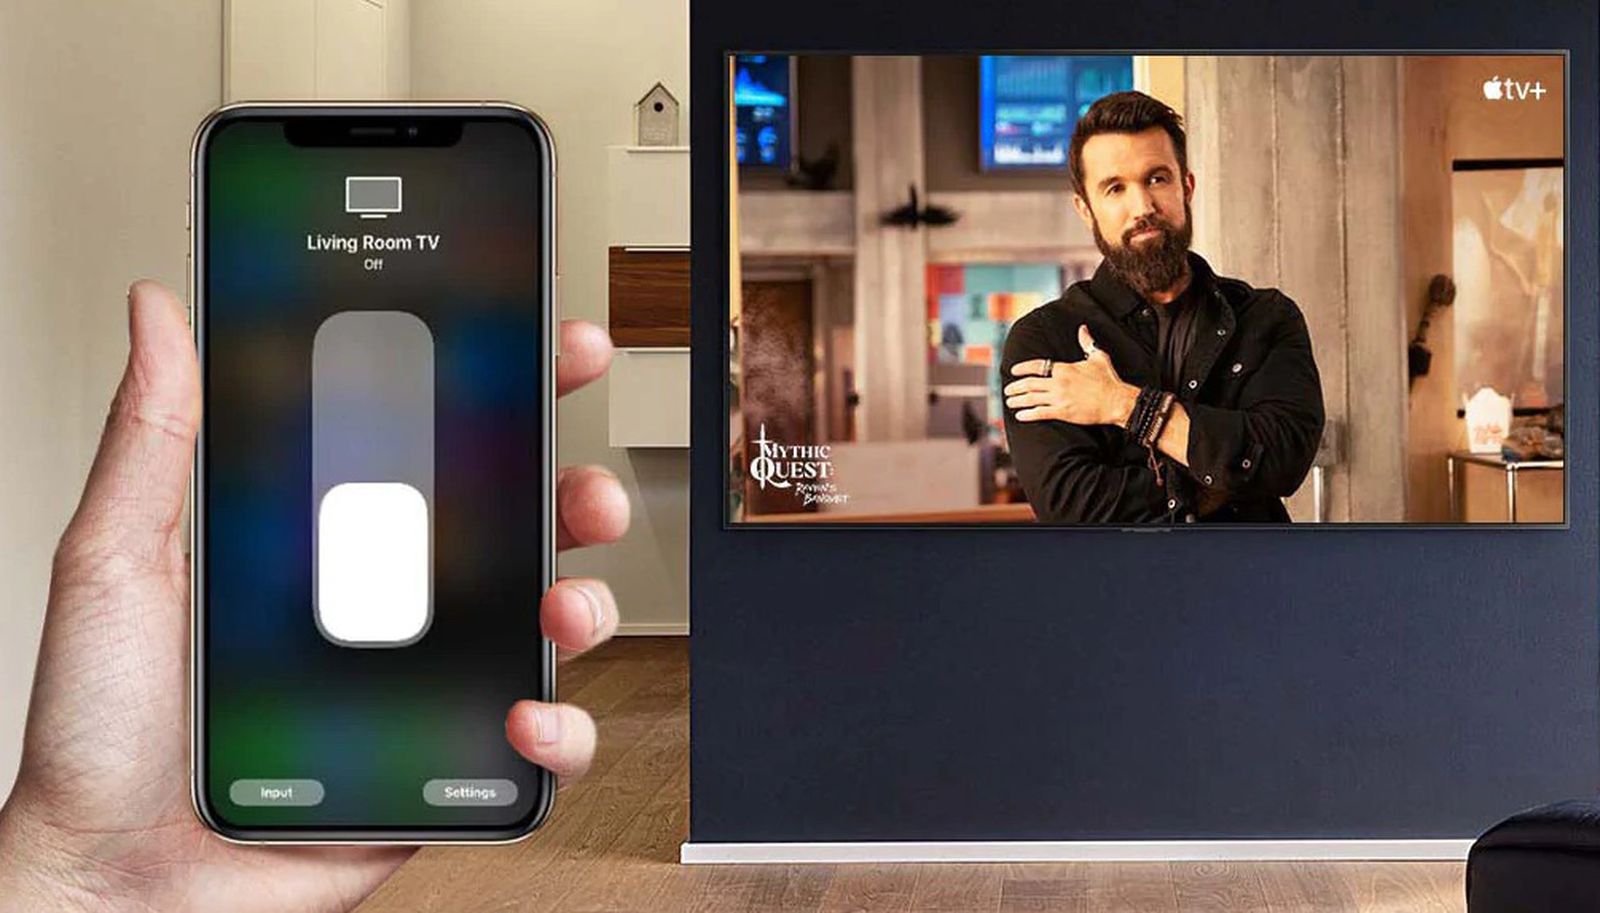 LG begins launching AirPlay 2 and HomeKit to smart TVs in 2018